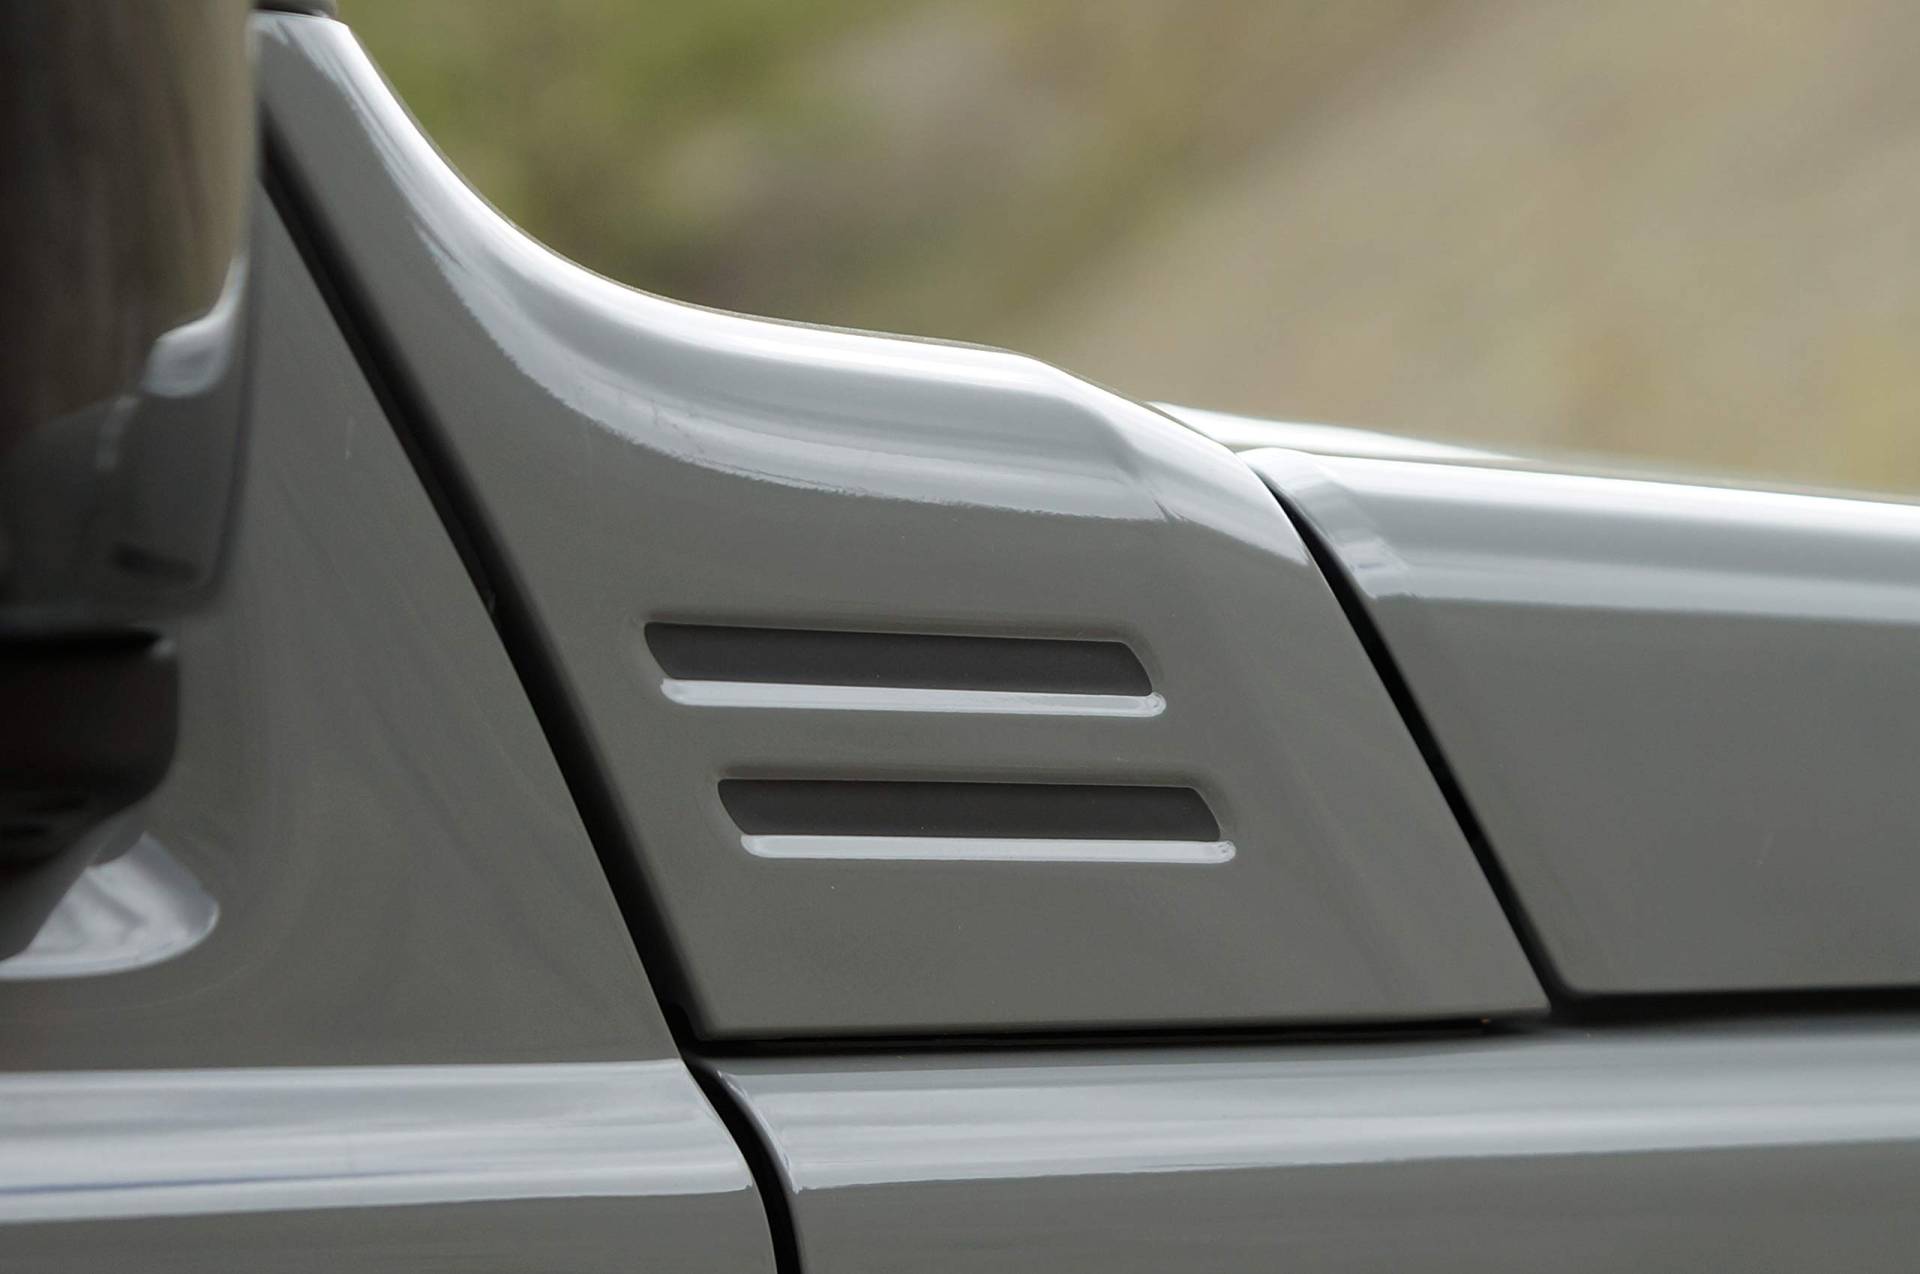 melivince passend für Suzuki Jimny GJ JB74 New Jimny A-Säule Aufkleber Vent Cover Design Folie Sticker von melivince